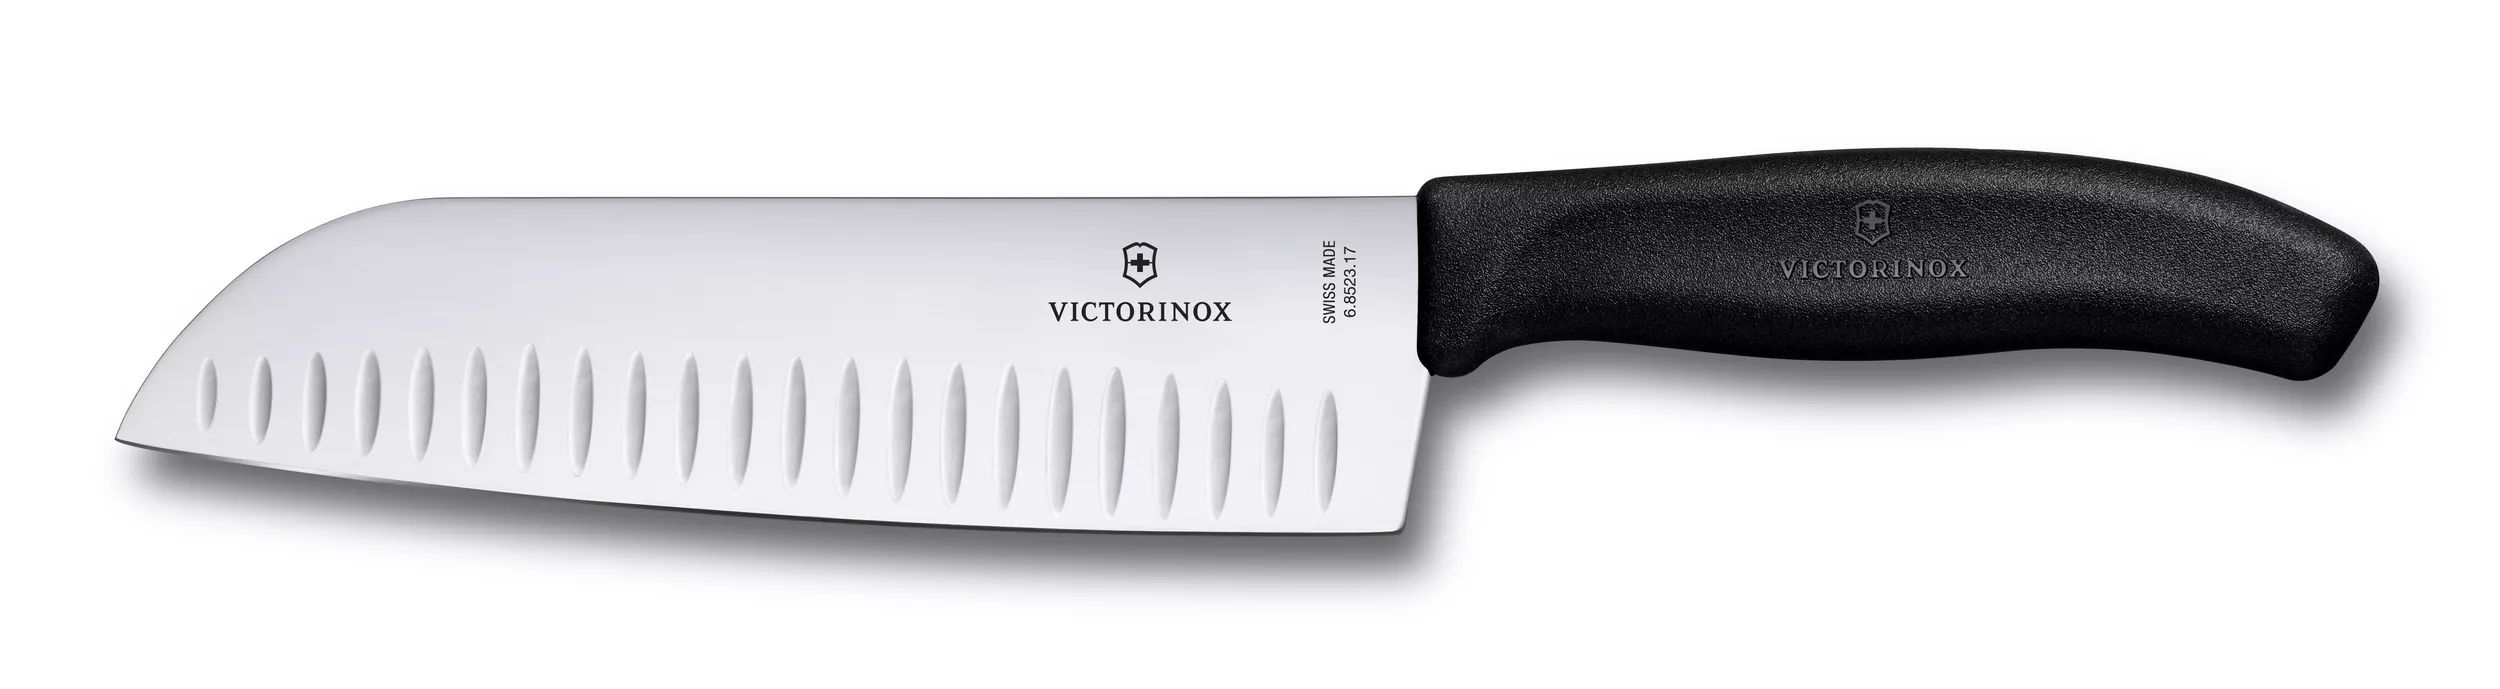 Victorinox fish knife 36 cm blue handle